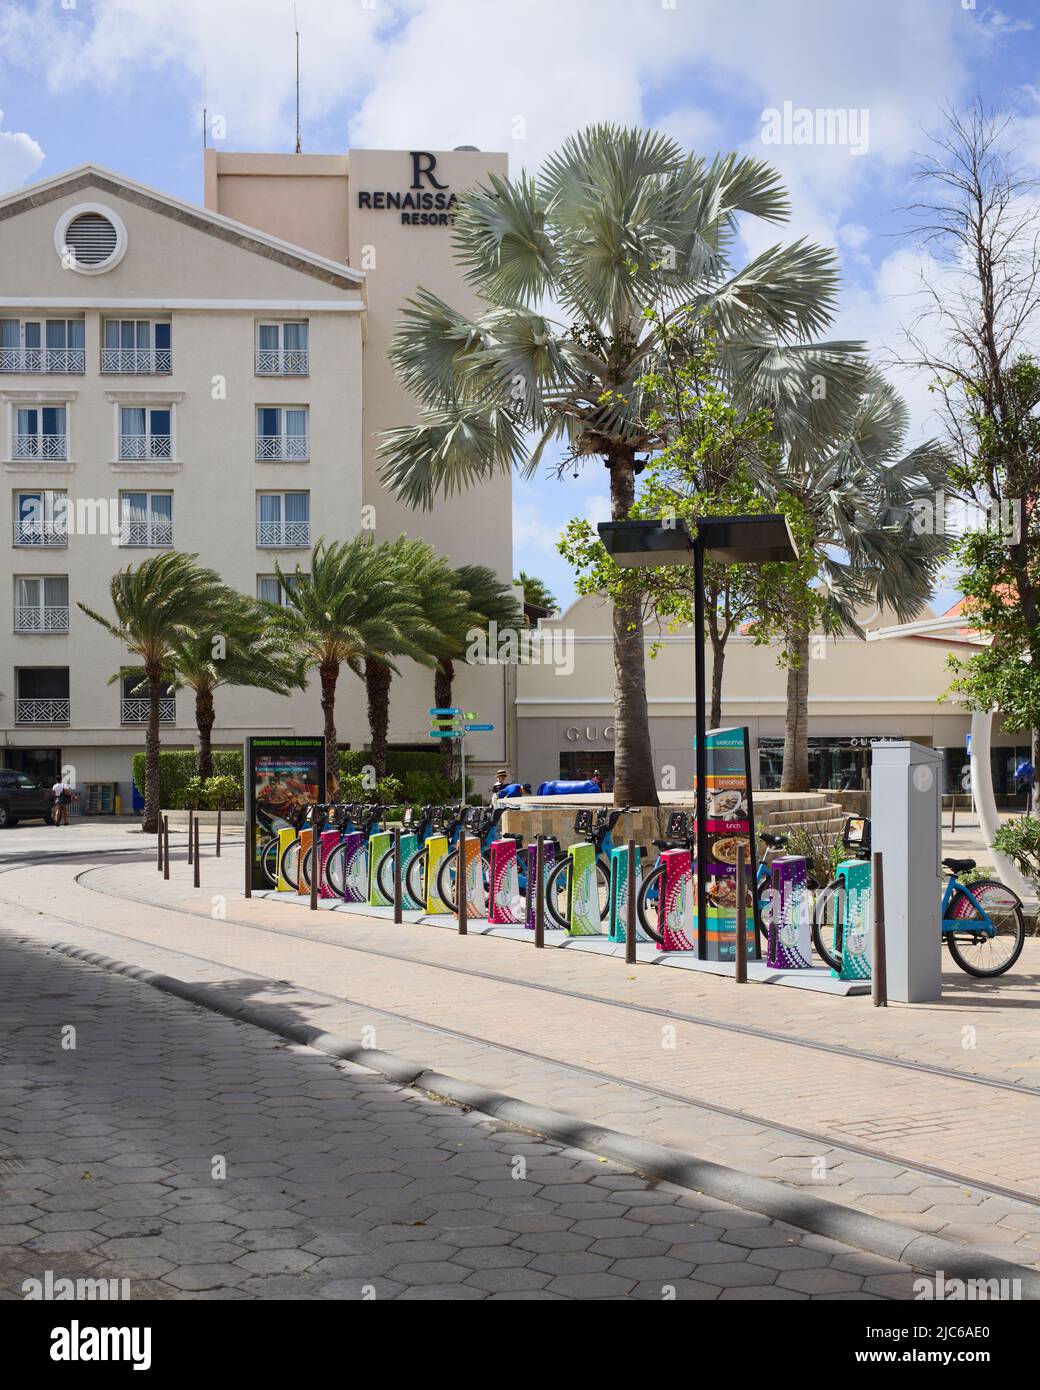 ORANJESTAD, ARUBA - DECEMBER 4, 2021: Plaza Daniel Leo square with Renaissance Resort Hotel, Renaissance Mall and Green Bike rental station on Aruba Stock Photo